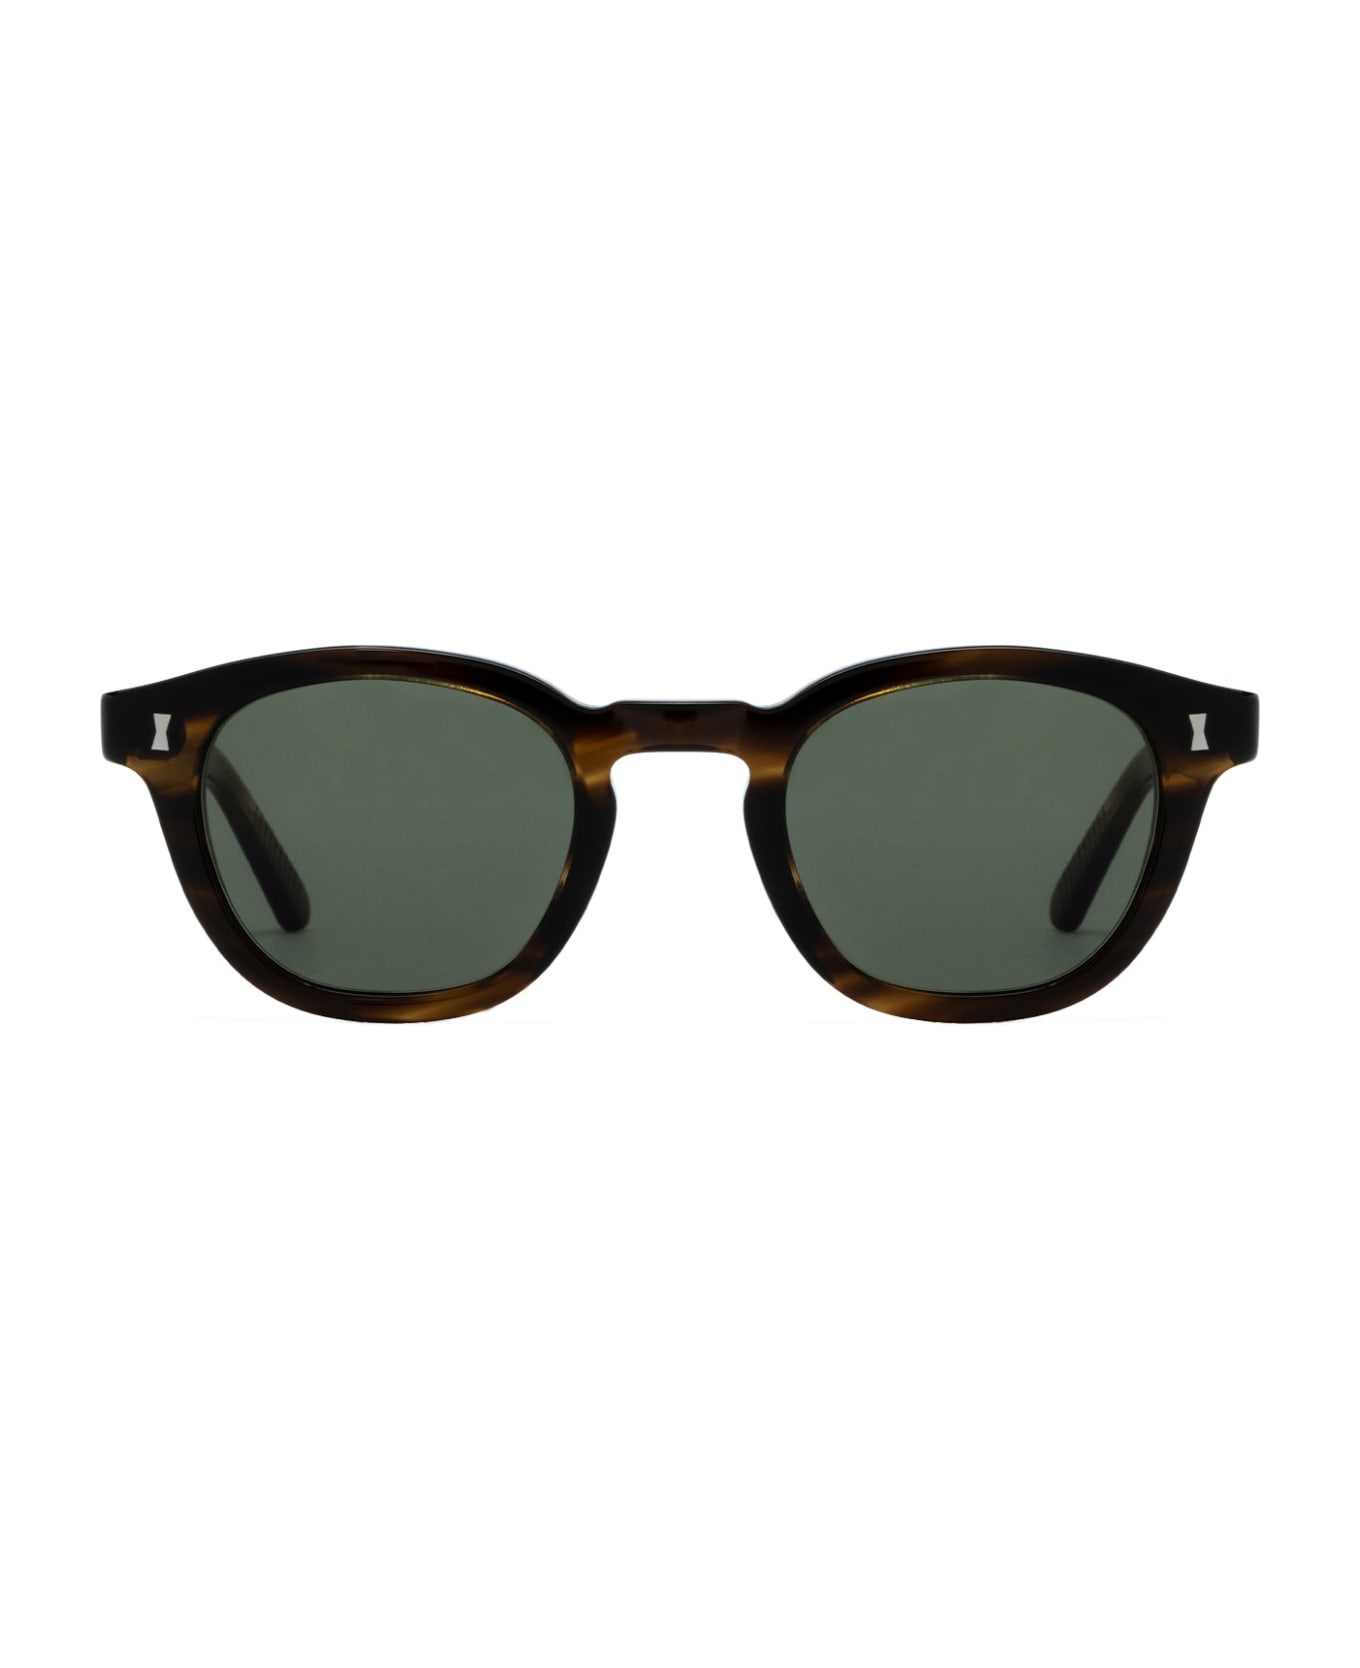 Cubitts Moreland Sun Olive Sunglasses - Olive